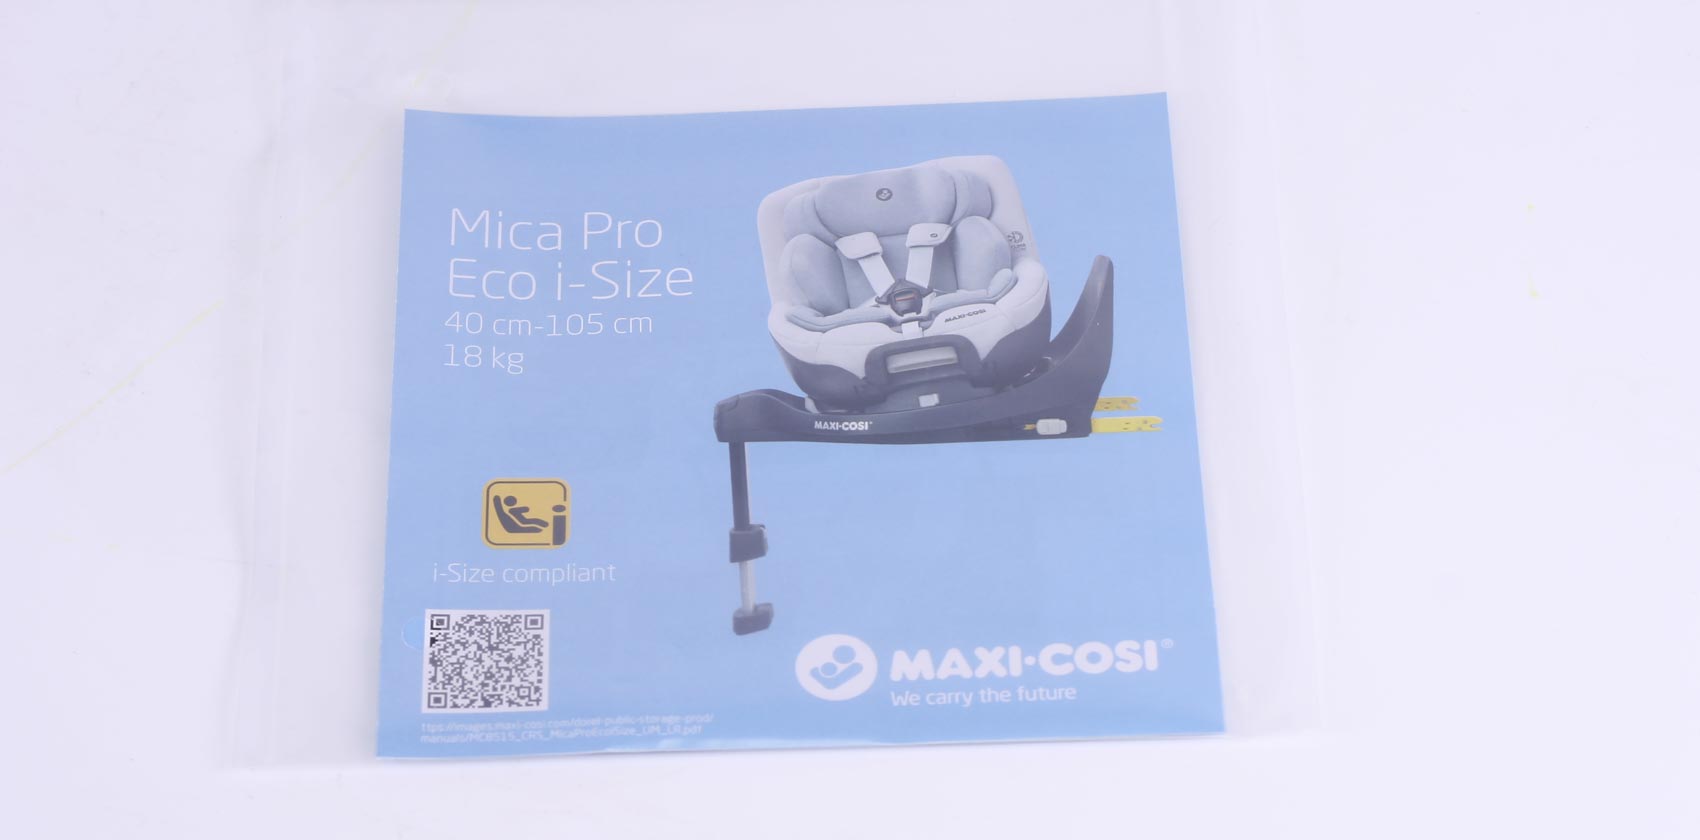 Maxi-Cosi Mica Pro Eco i-Size инструкции